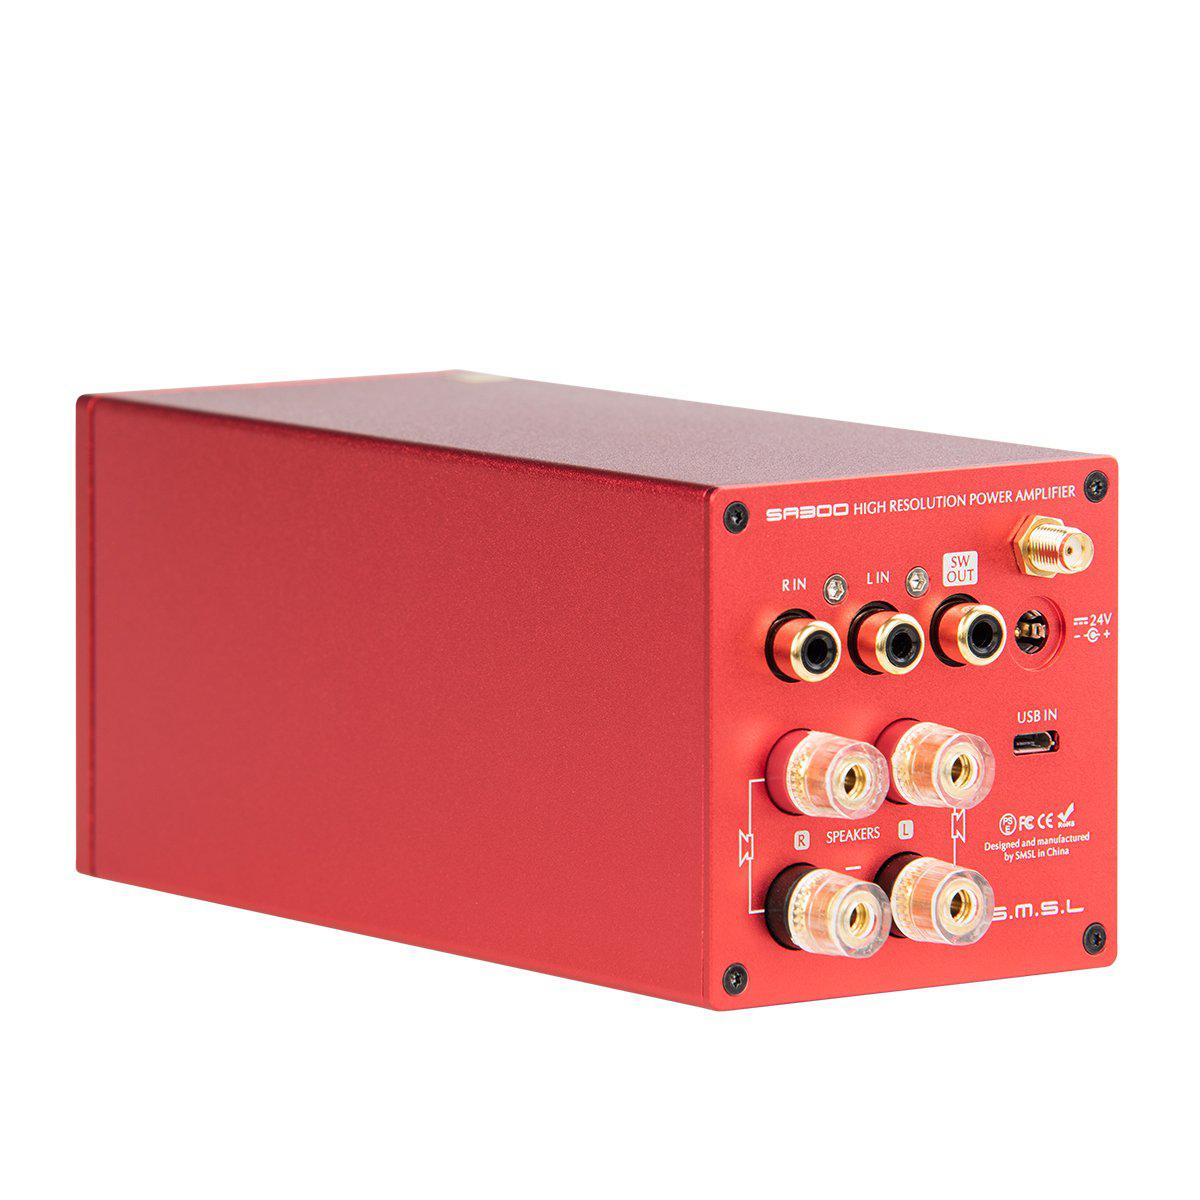 SMSL SA300 Digital Power Amplifier